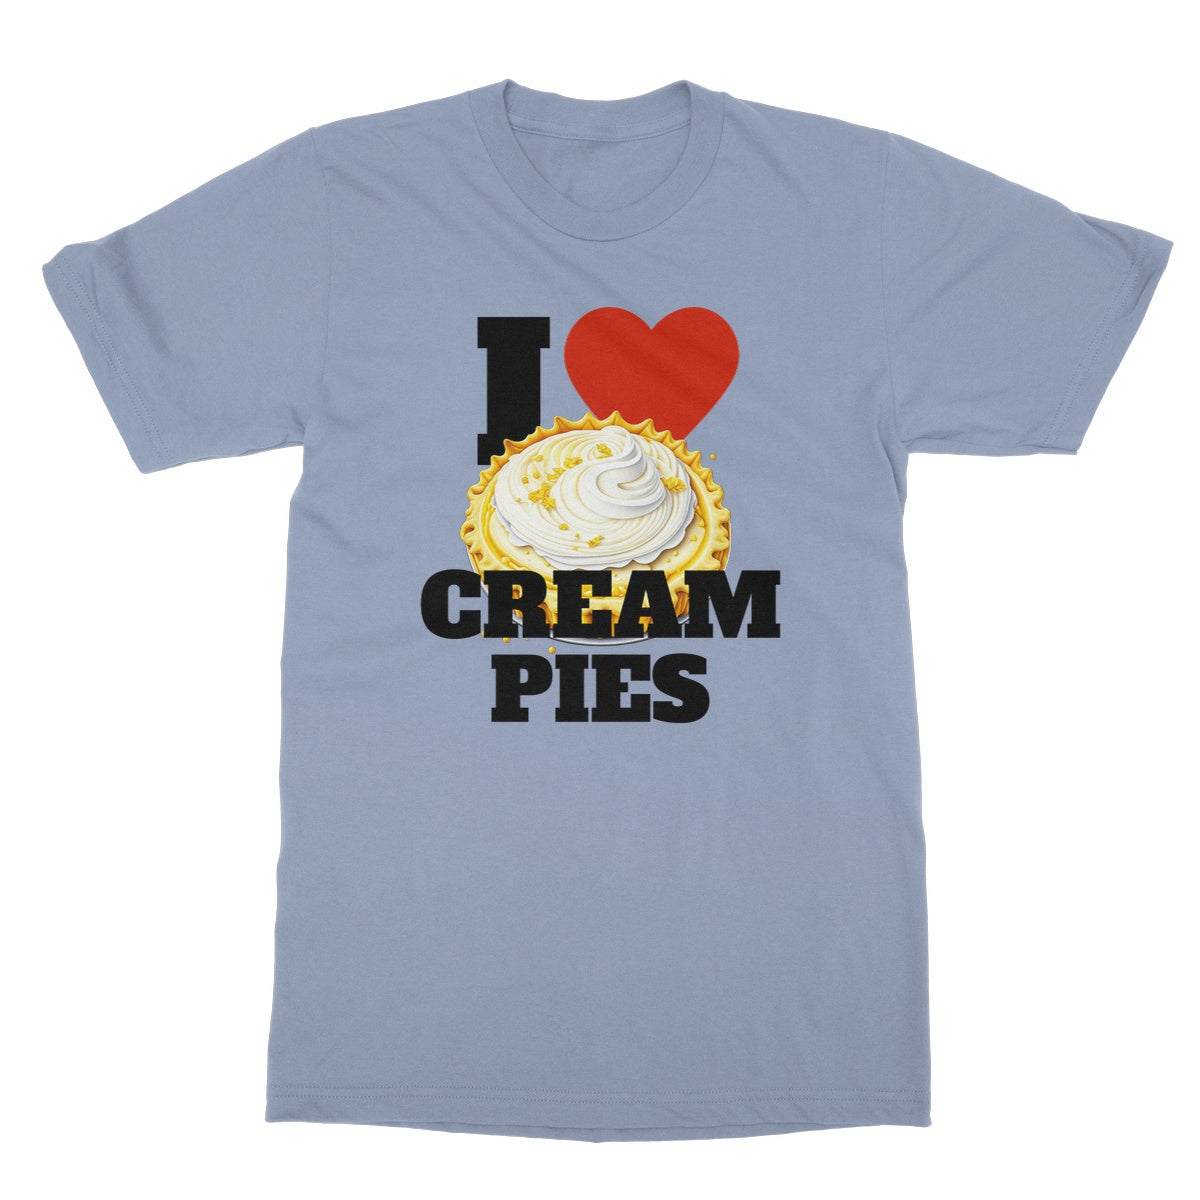 I love cream pies t shirt blue